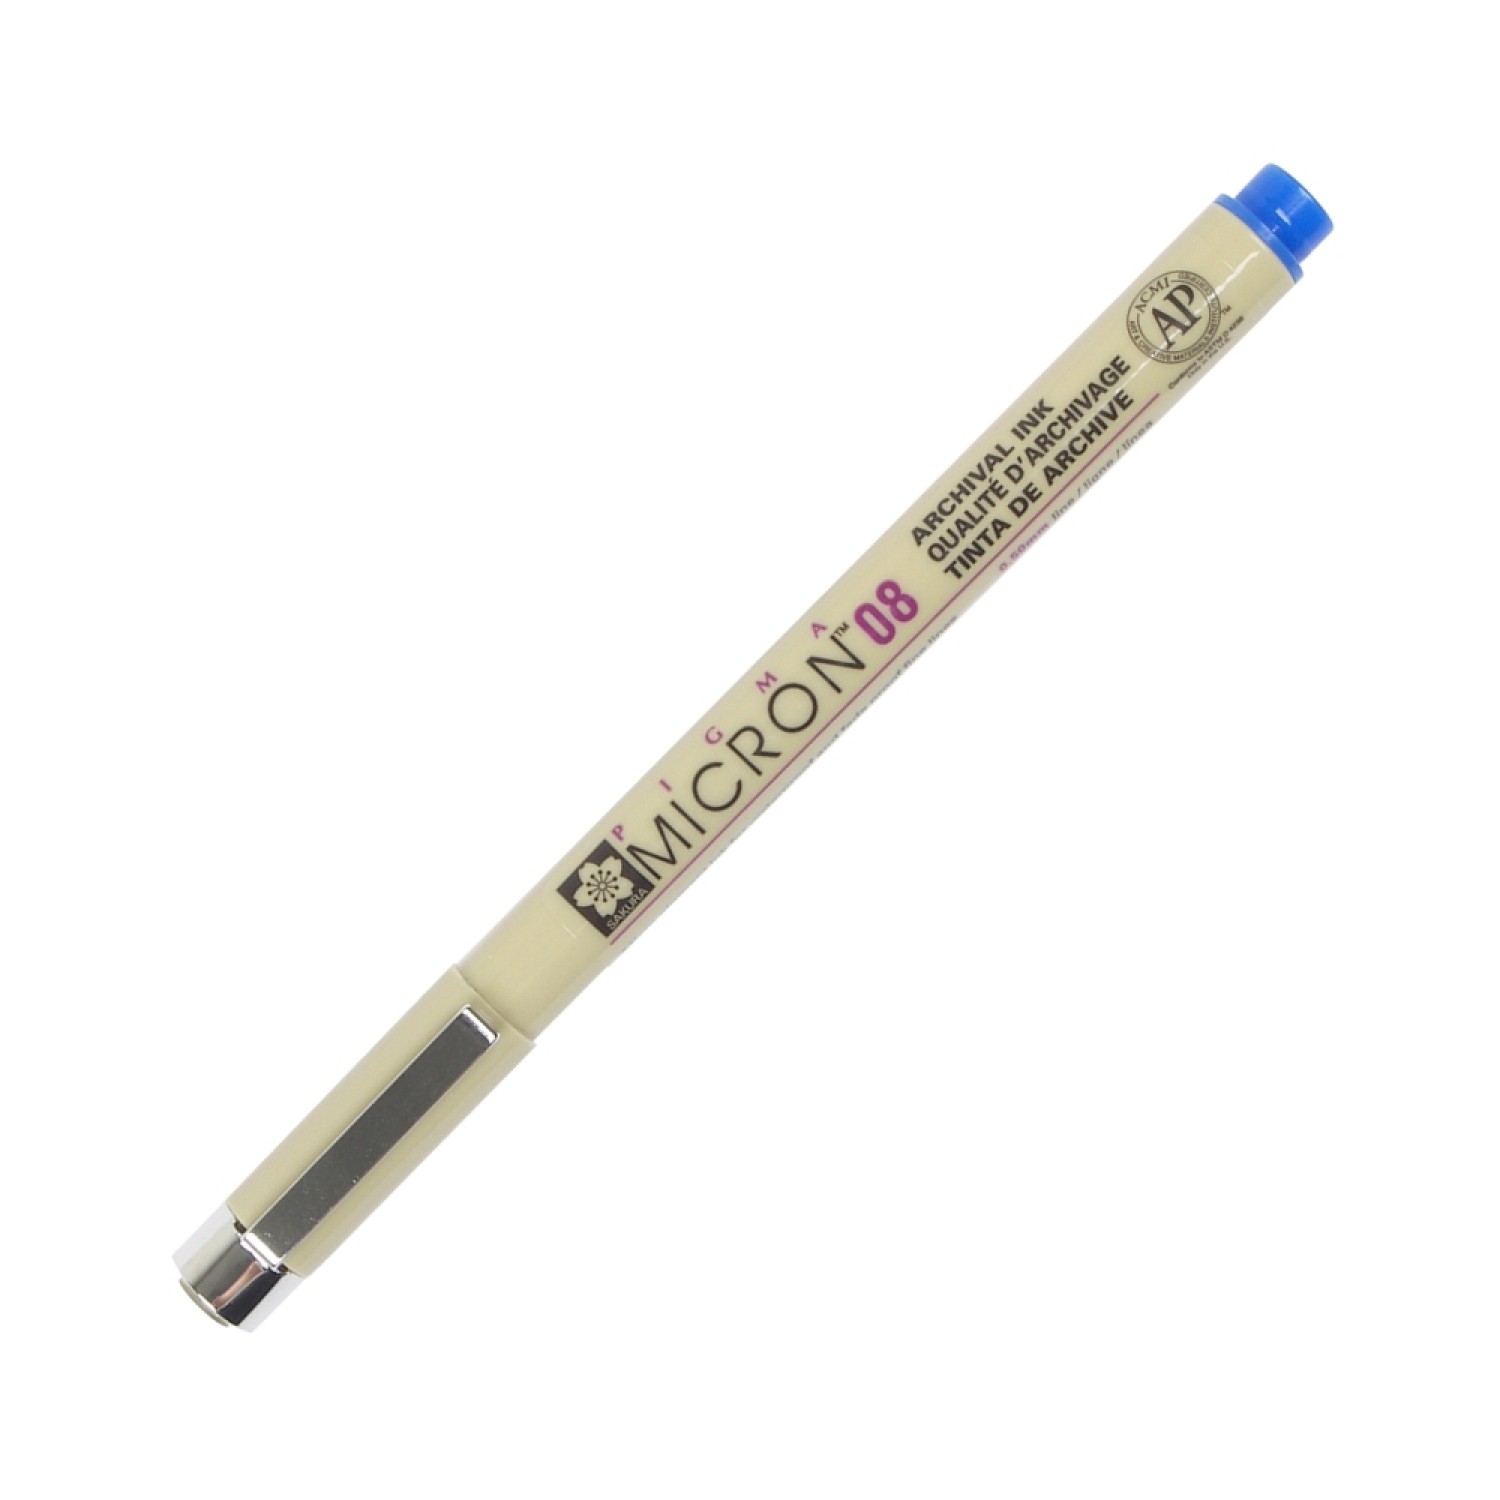 Sakura Pigma Micron 08 Pen 0.50mm-Blue BestPensOnline.com